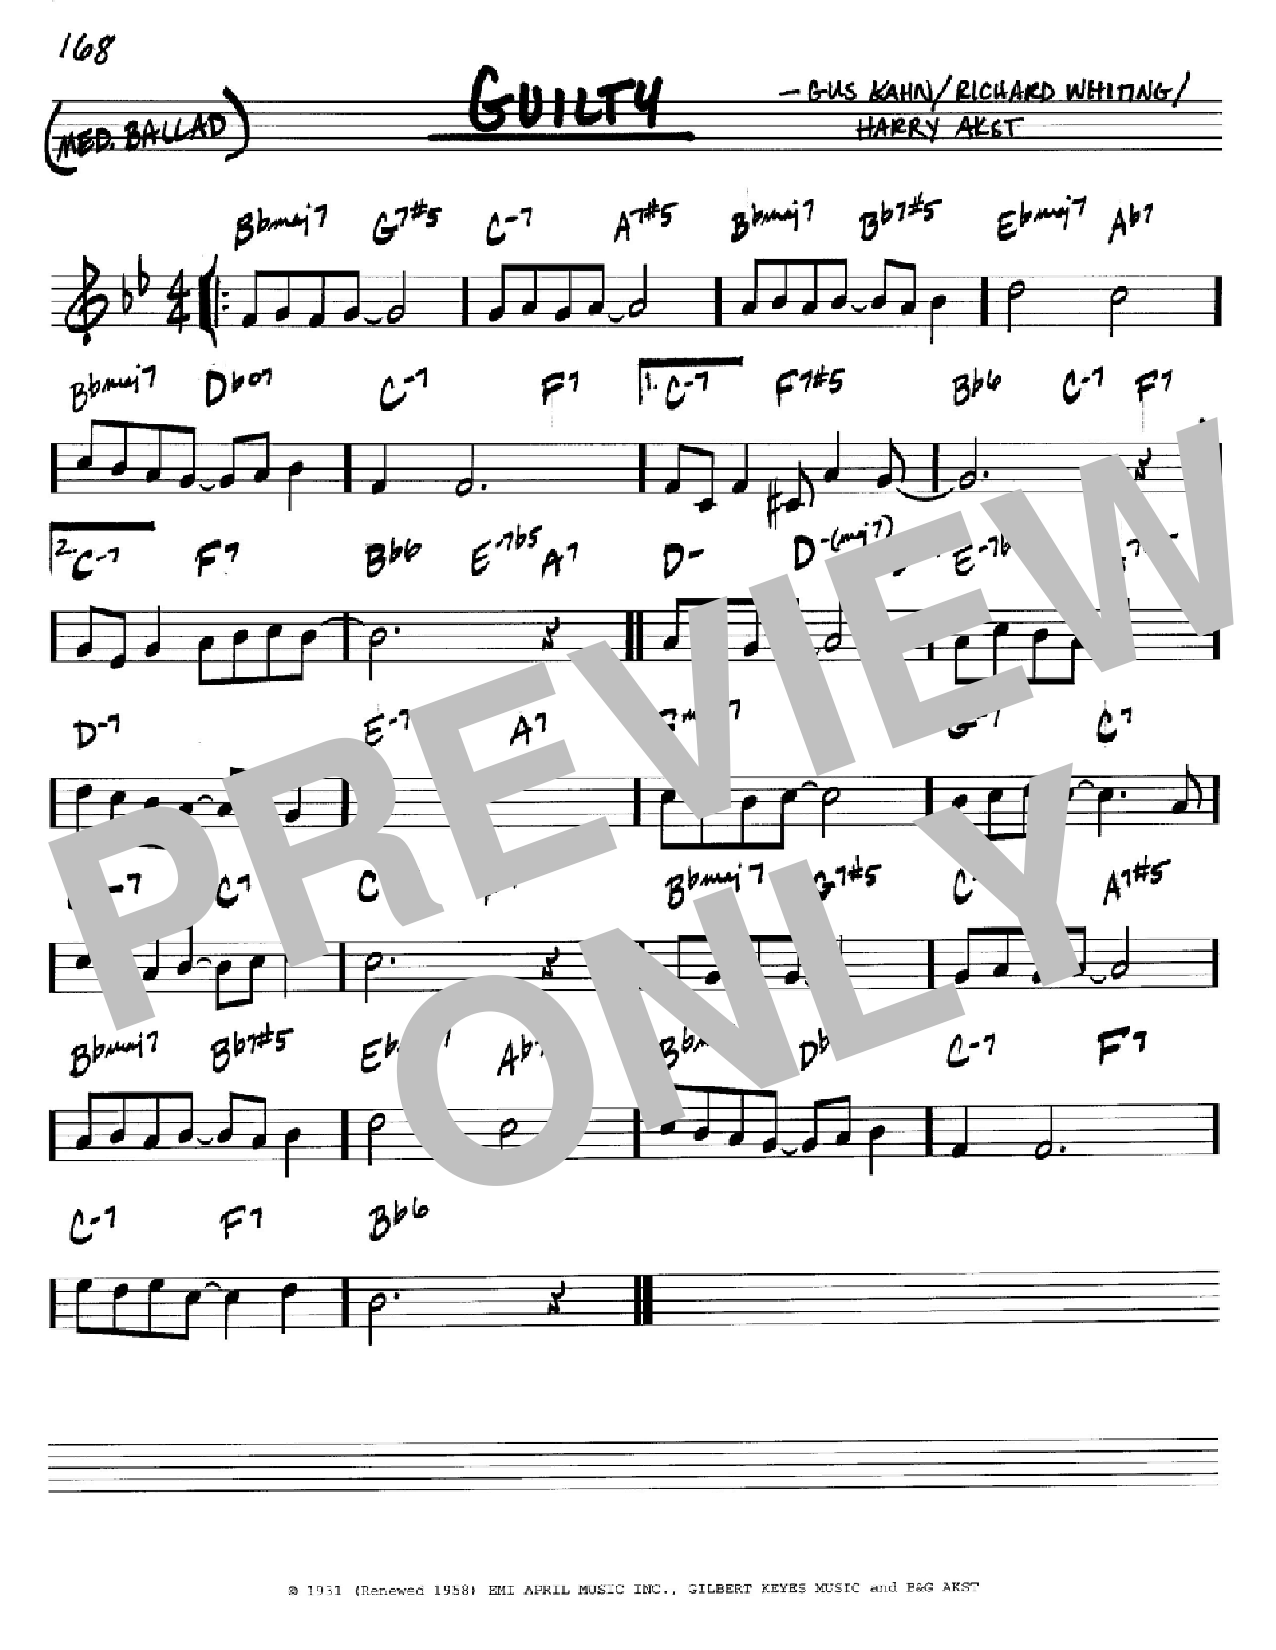 Gus Kahn Guilty Sheet Music Notes & Chords for Real Book - Melody, Lyrics & Chords - C Instruments - Download or Print PDF